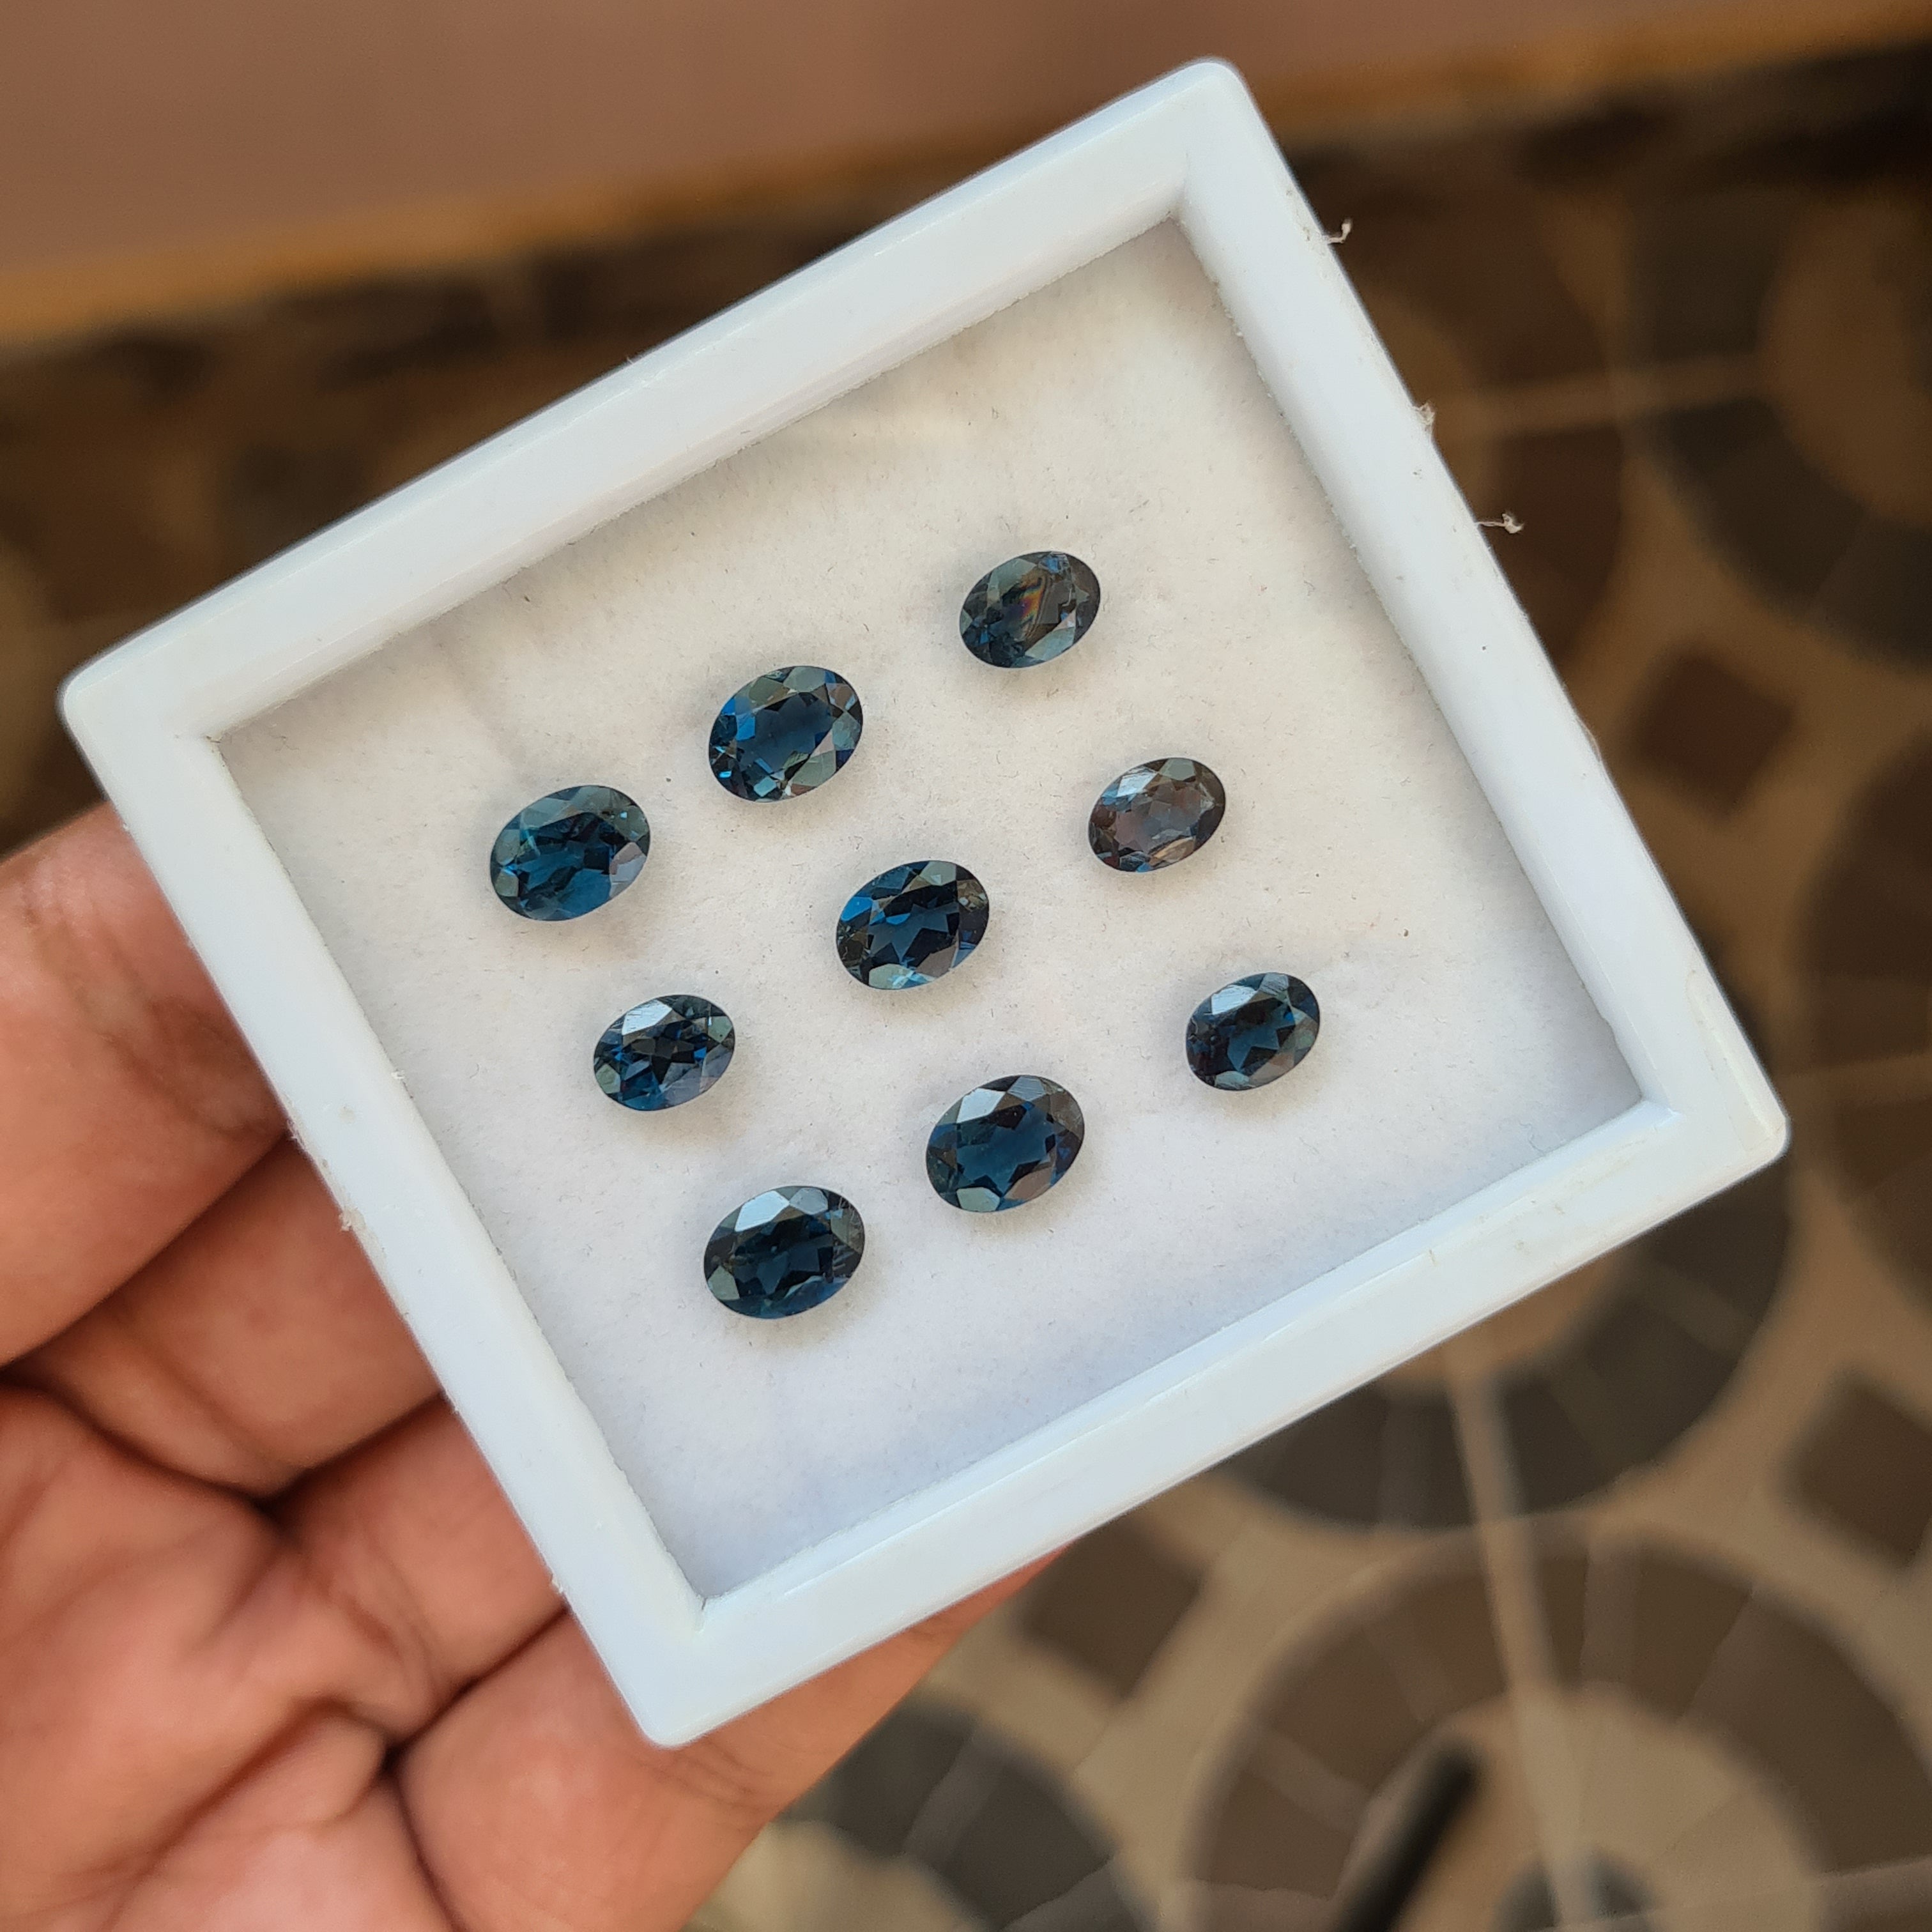 9 Pcs Natural London Blue Topaz Faceted Gemstone Oval Shape Size: 7-8mm - The LabradoriteKing